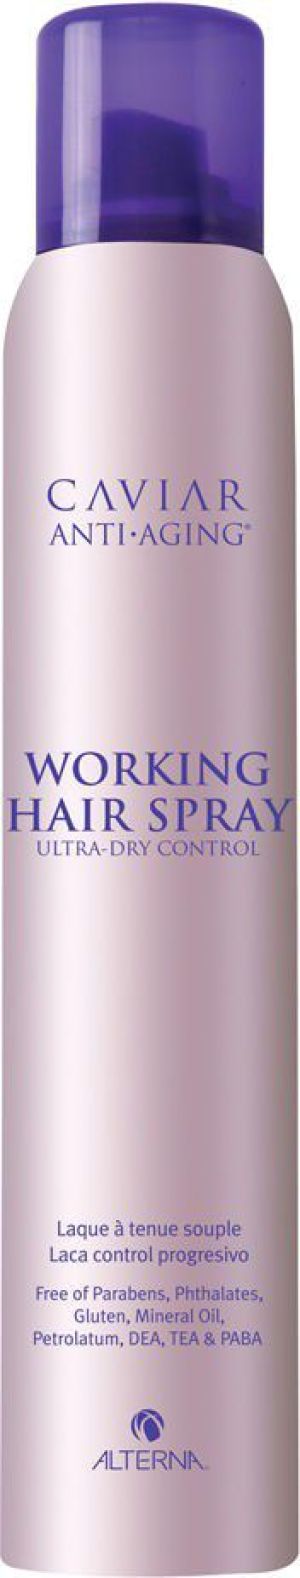 Alterna Caviar Working Hair Spray 250ml 1